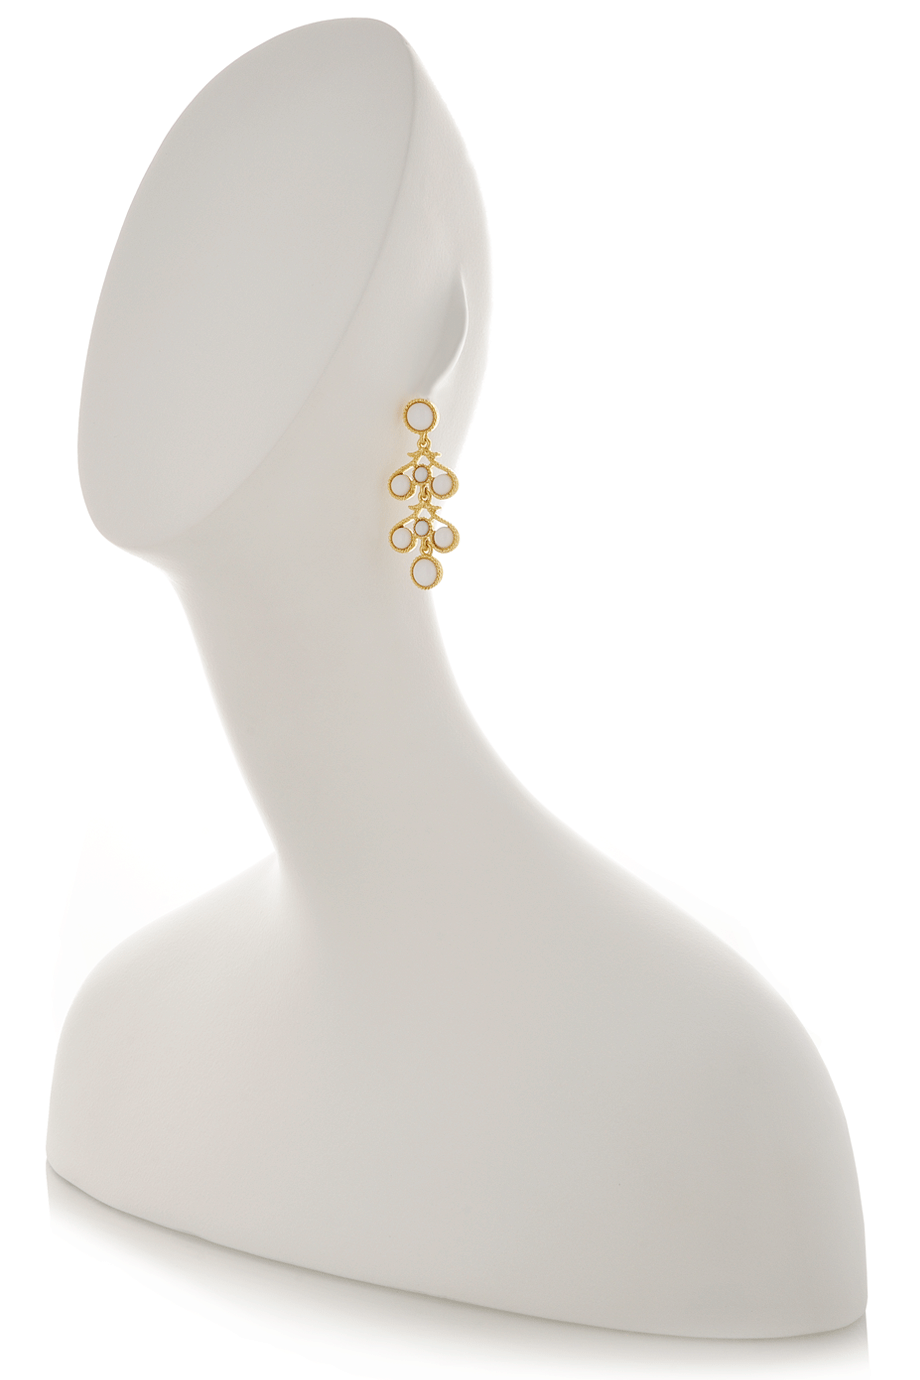 KENNETH JAY LANE BAROQUE White Gold Earrings – PRET-A-BEAUTE